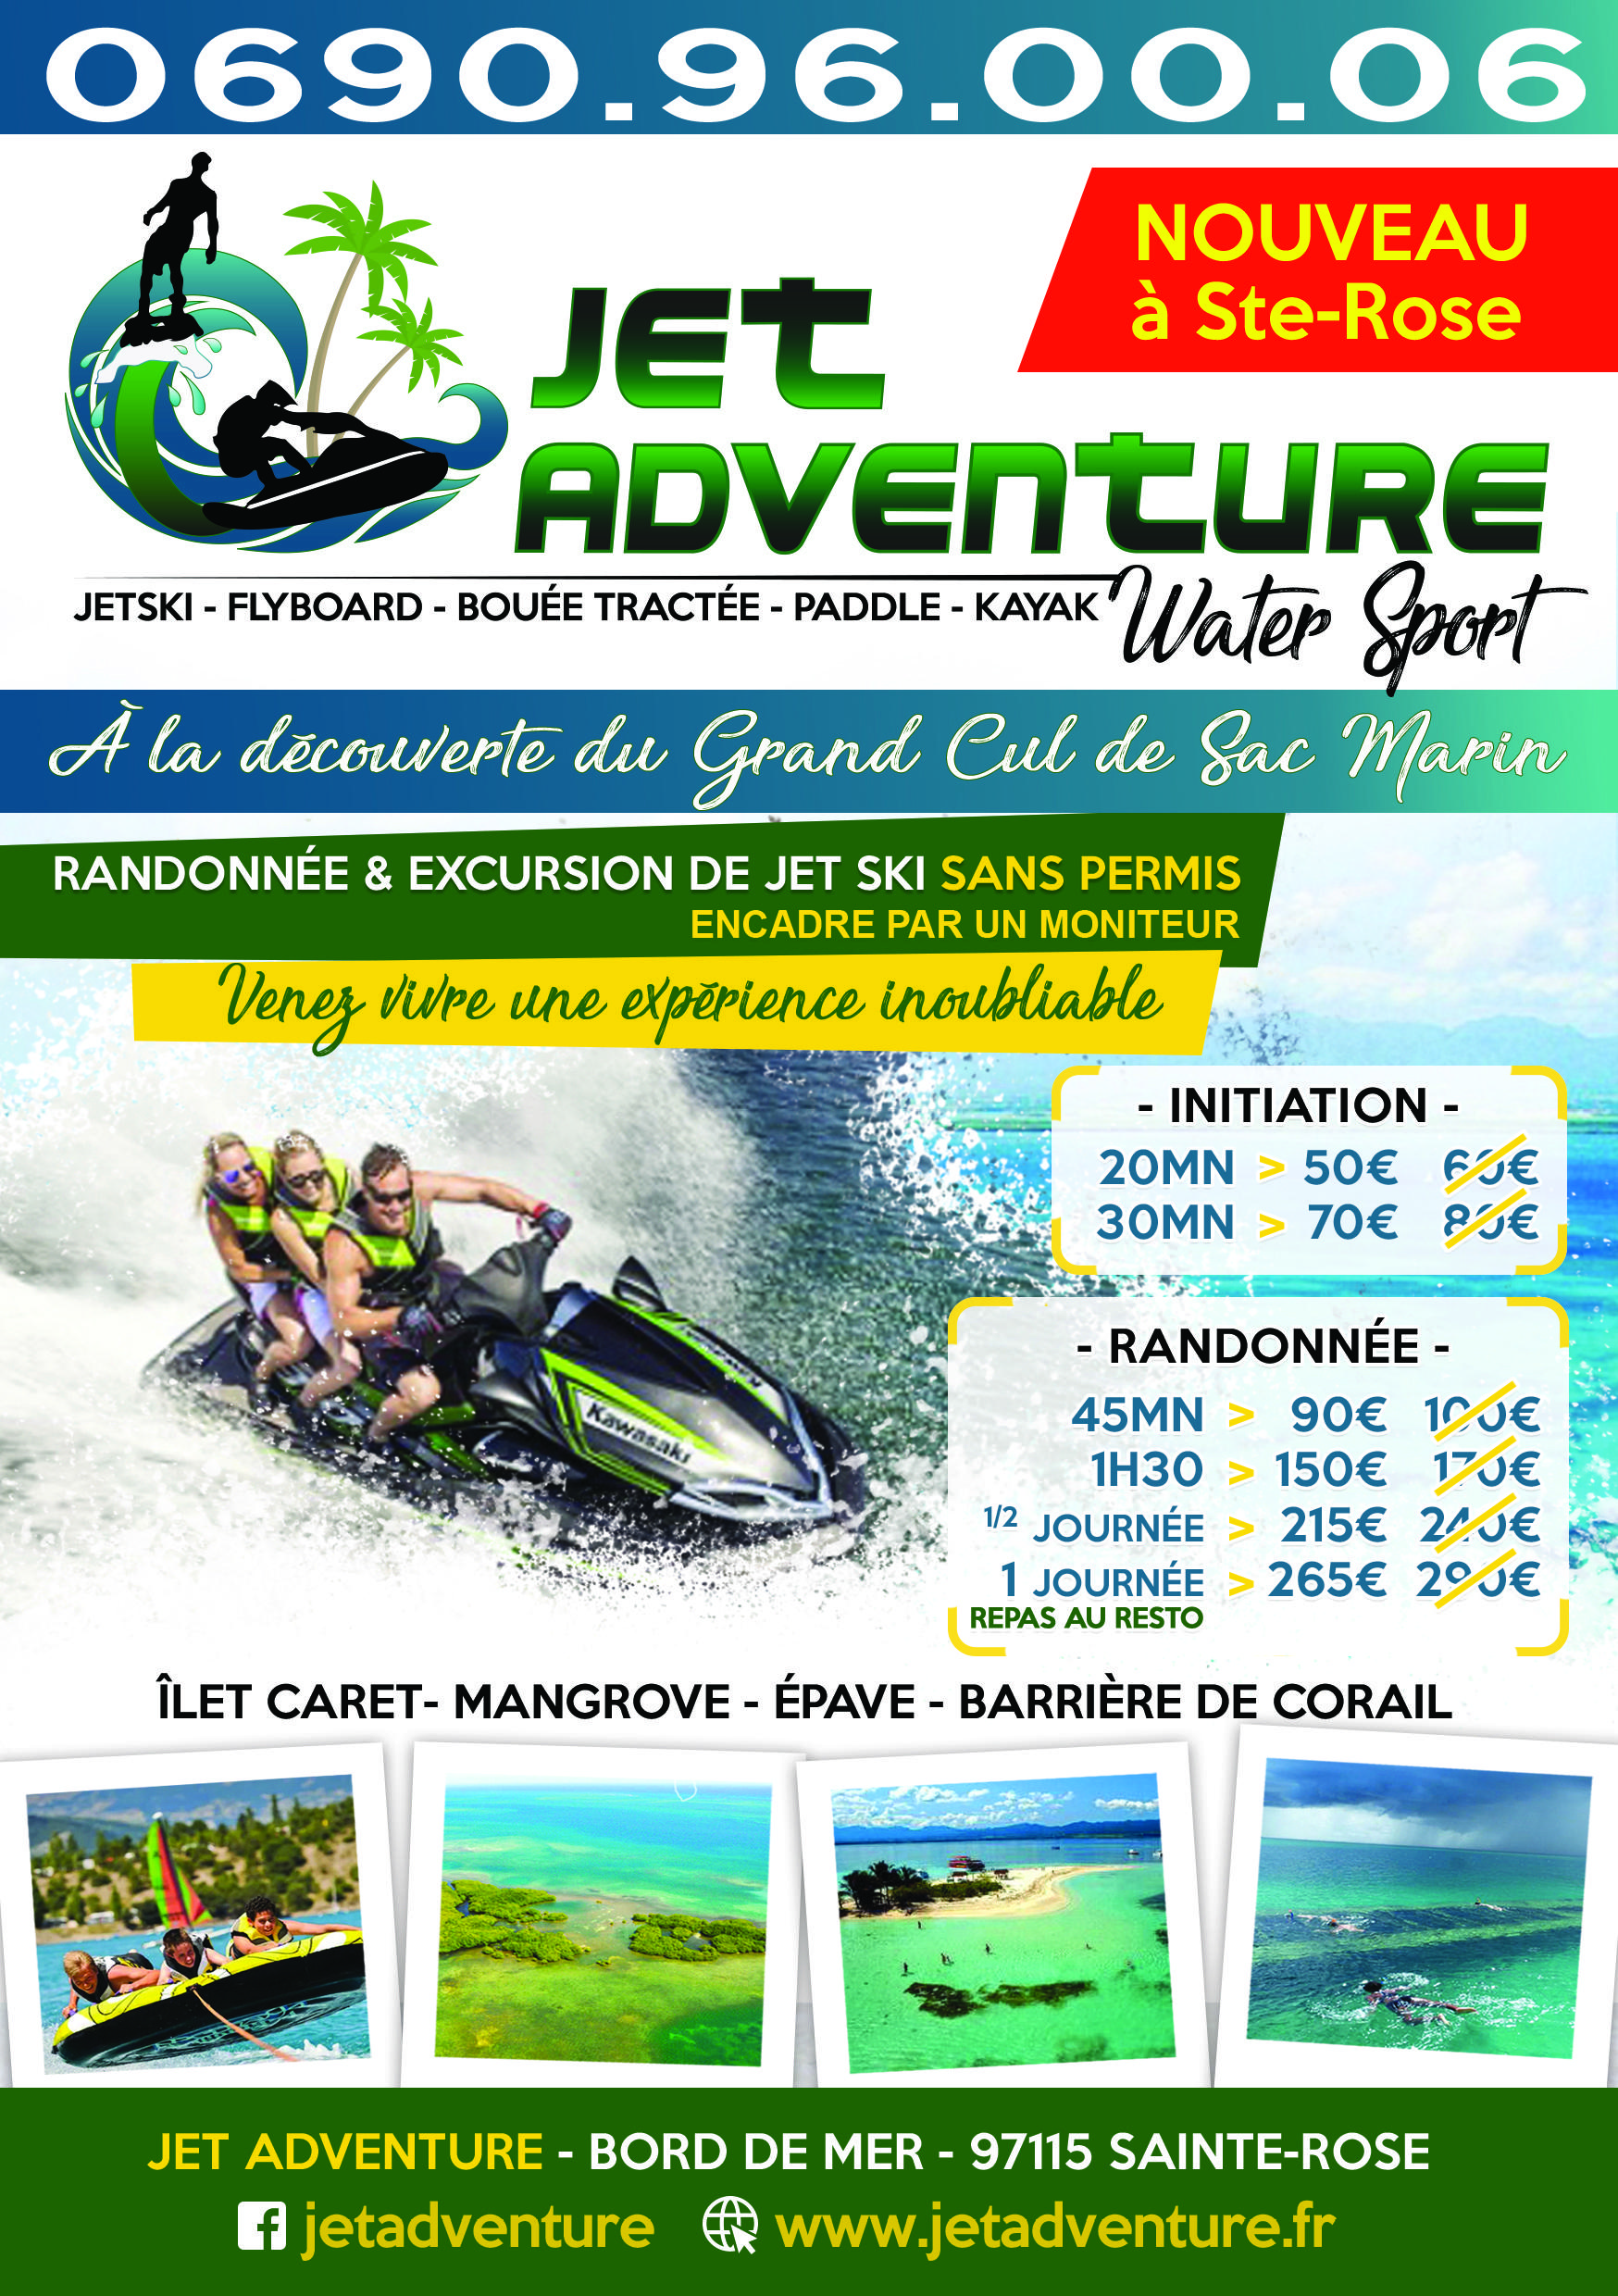 Jet Adventure Sainte-Rose